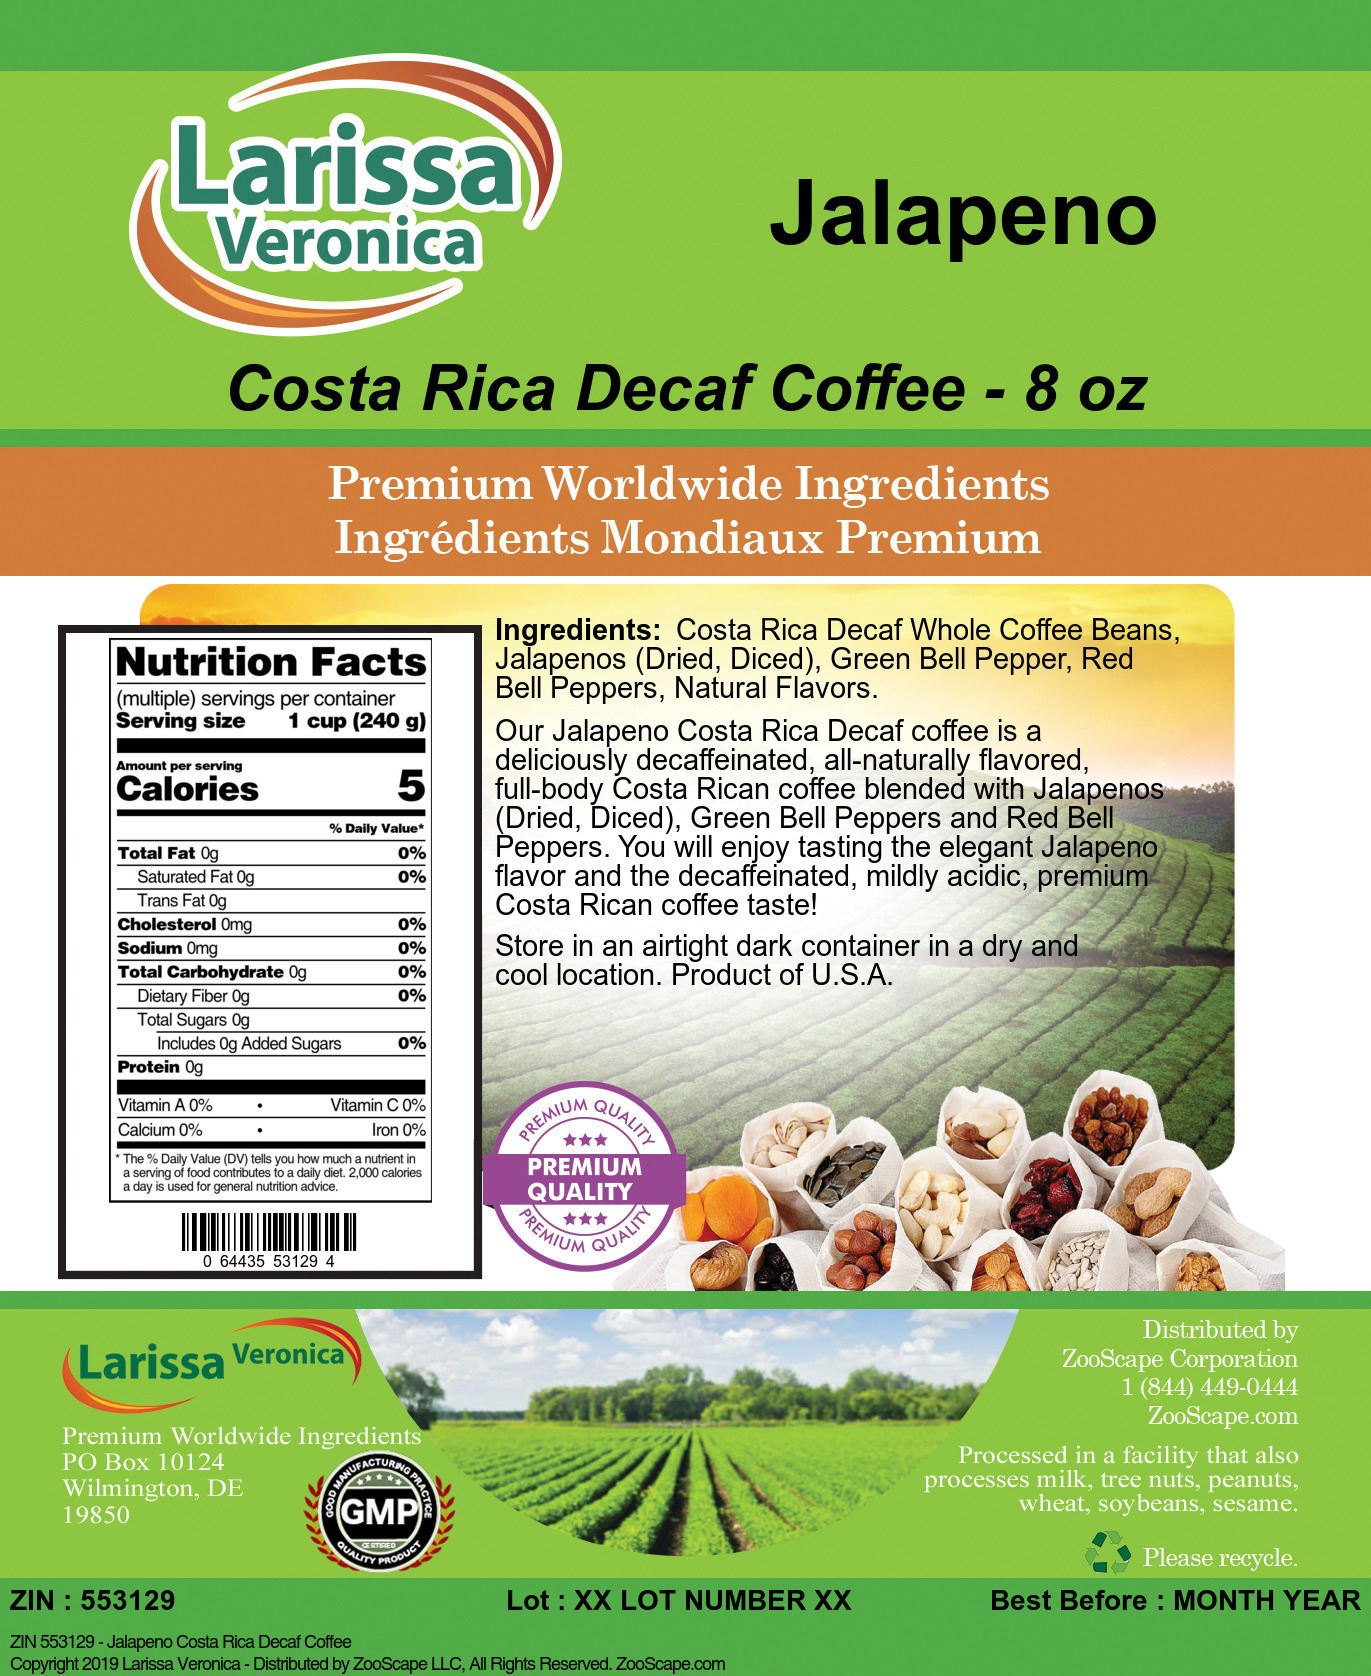 Jalapeno Costa Rica Decaf Coffee - Label